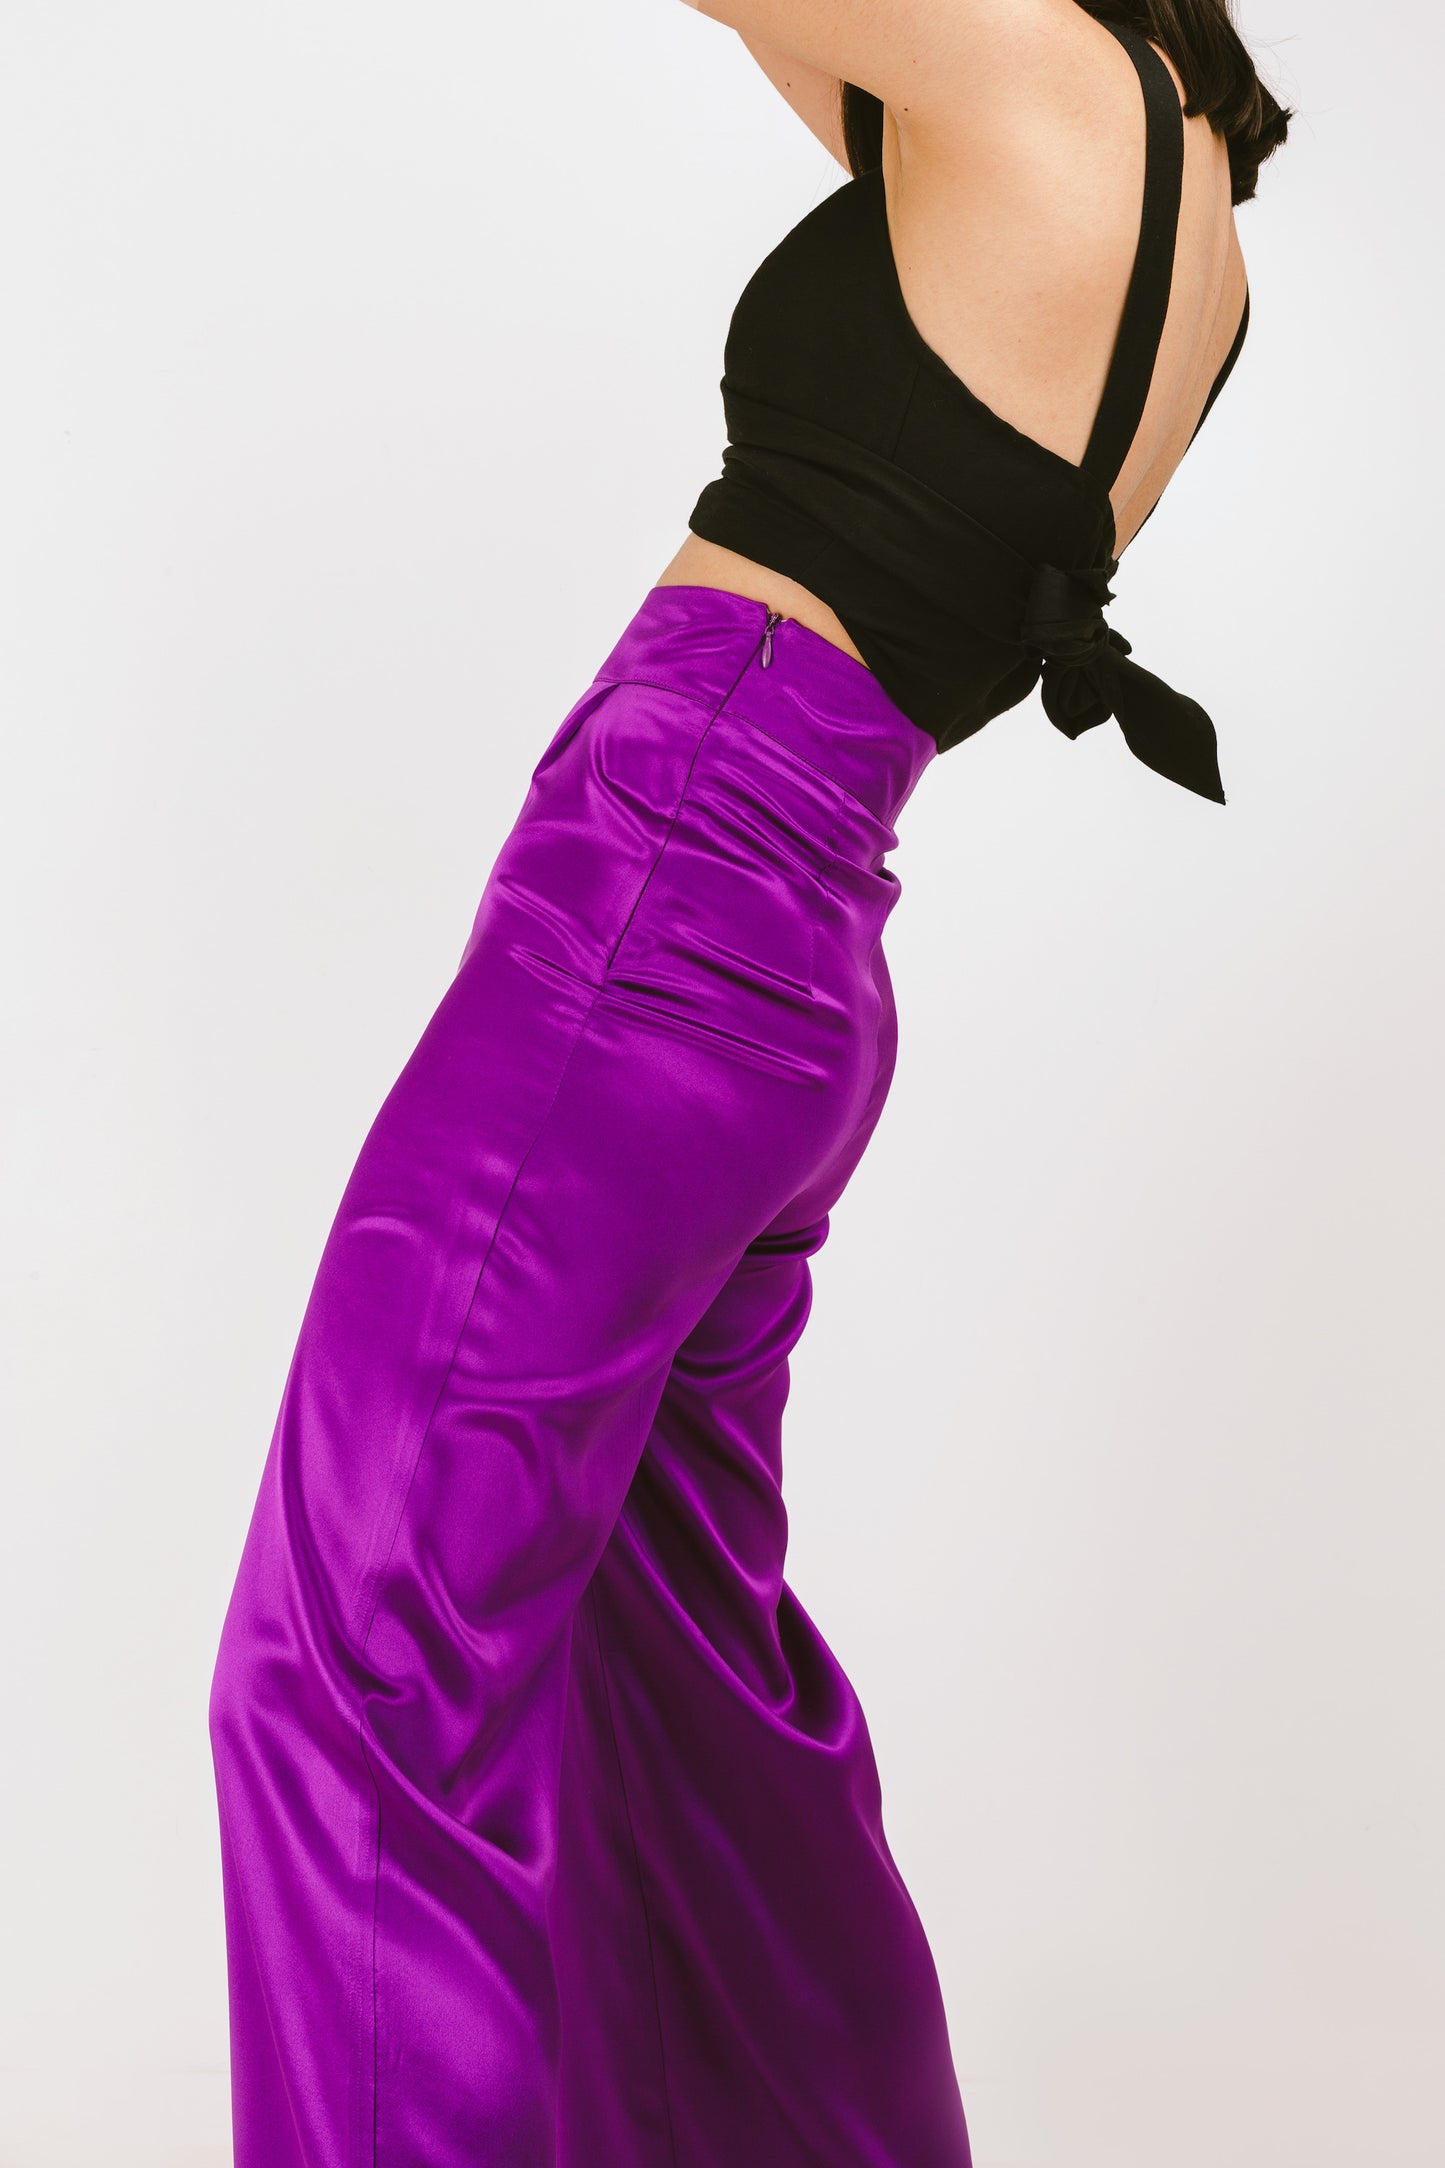 Purple pants